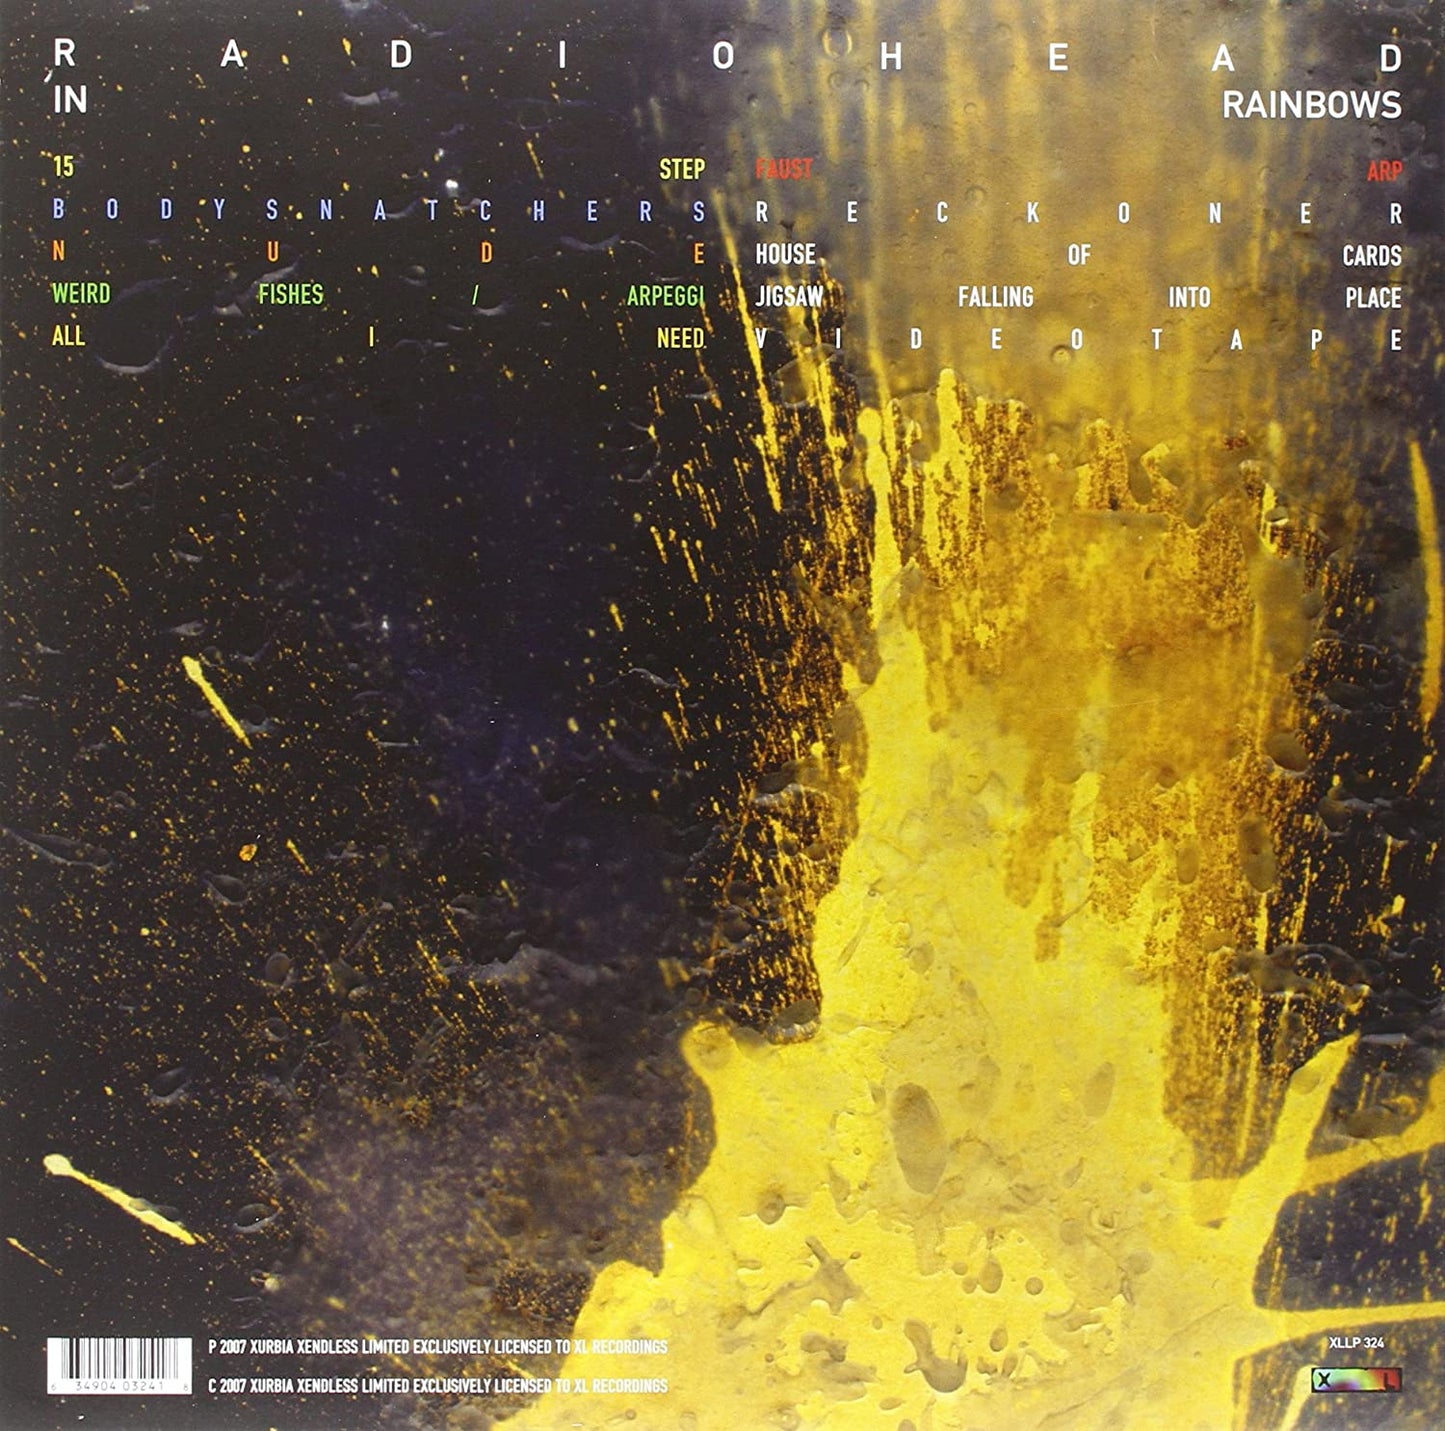 Radiohead/In Rainbows [LP]